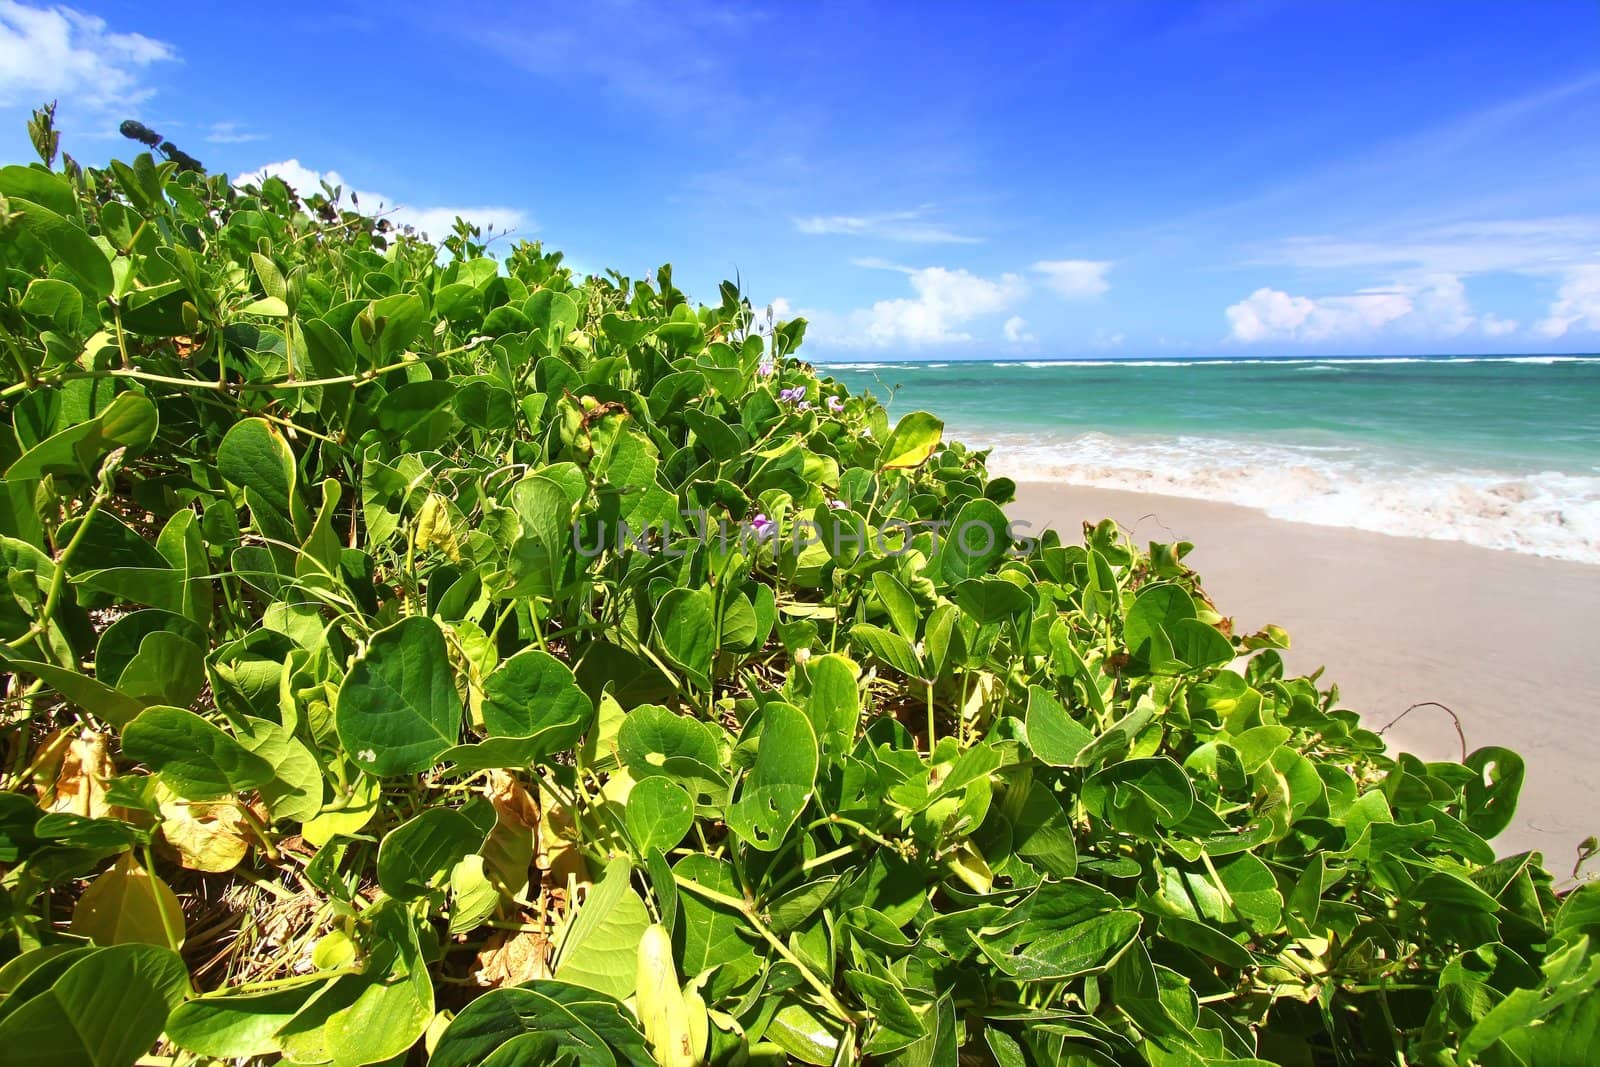 Lush vegetation grows along the coast at Anse de Sables Beach in Saint Lucia.